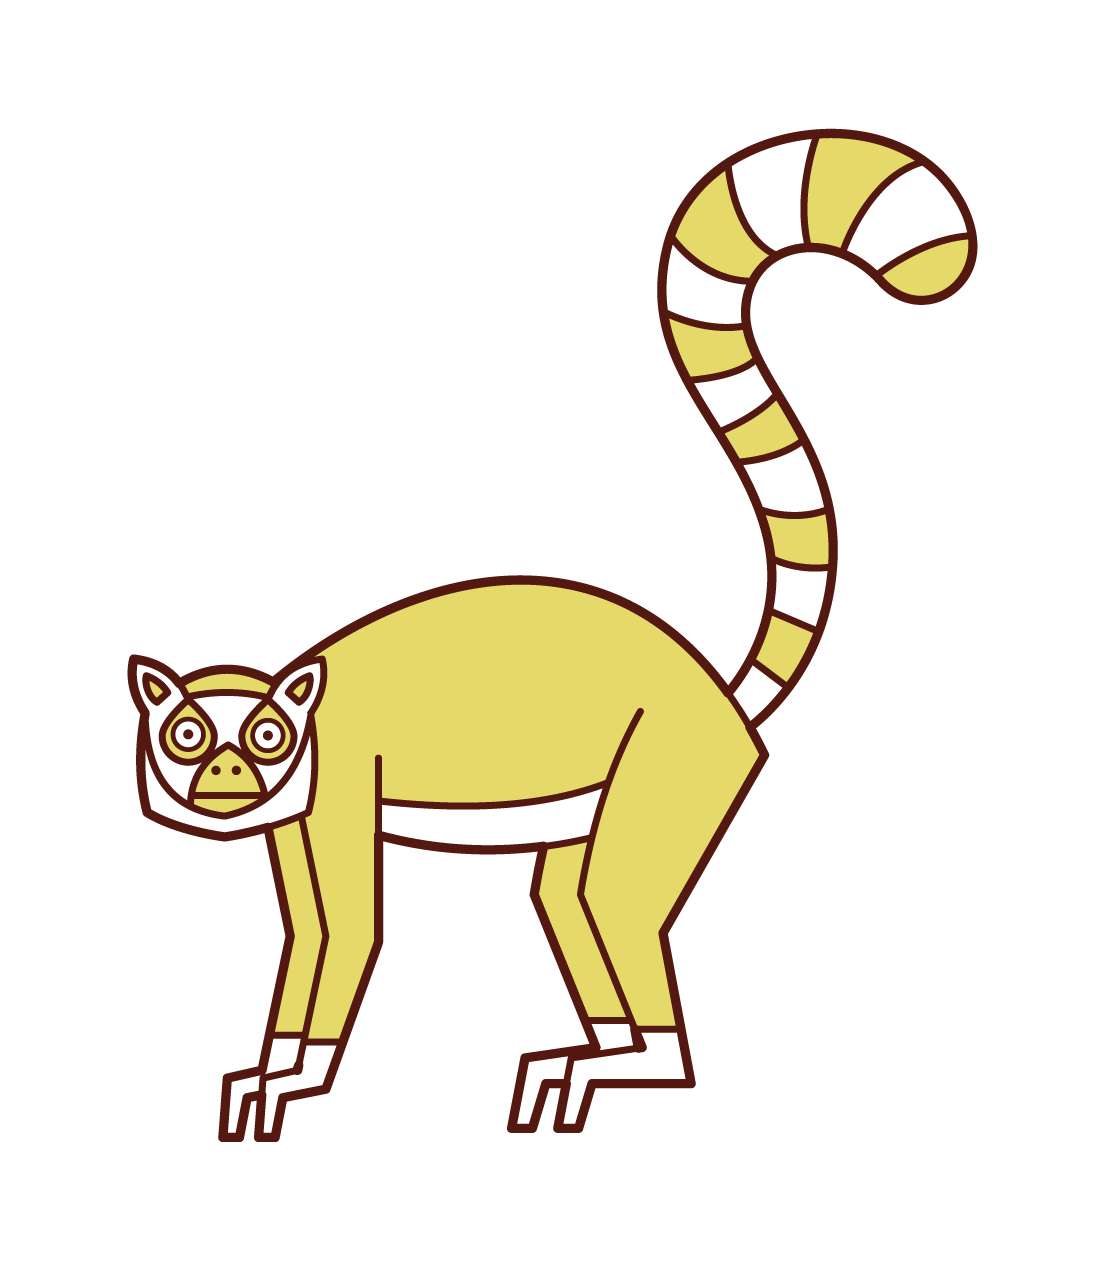 Illustration of a lemur